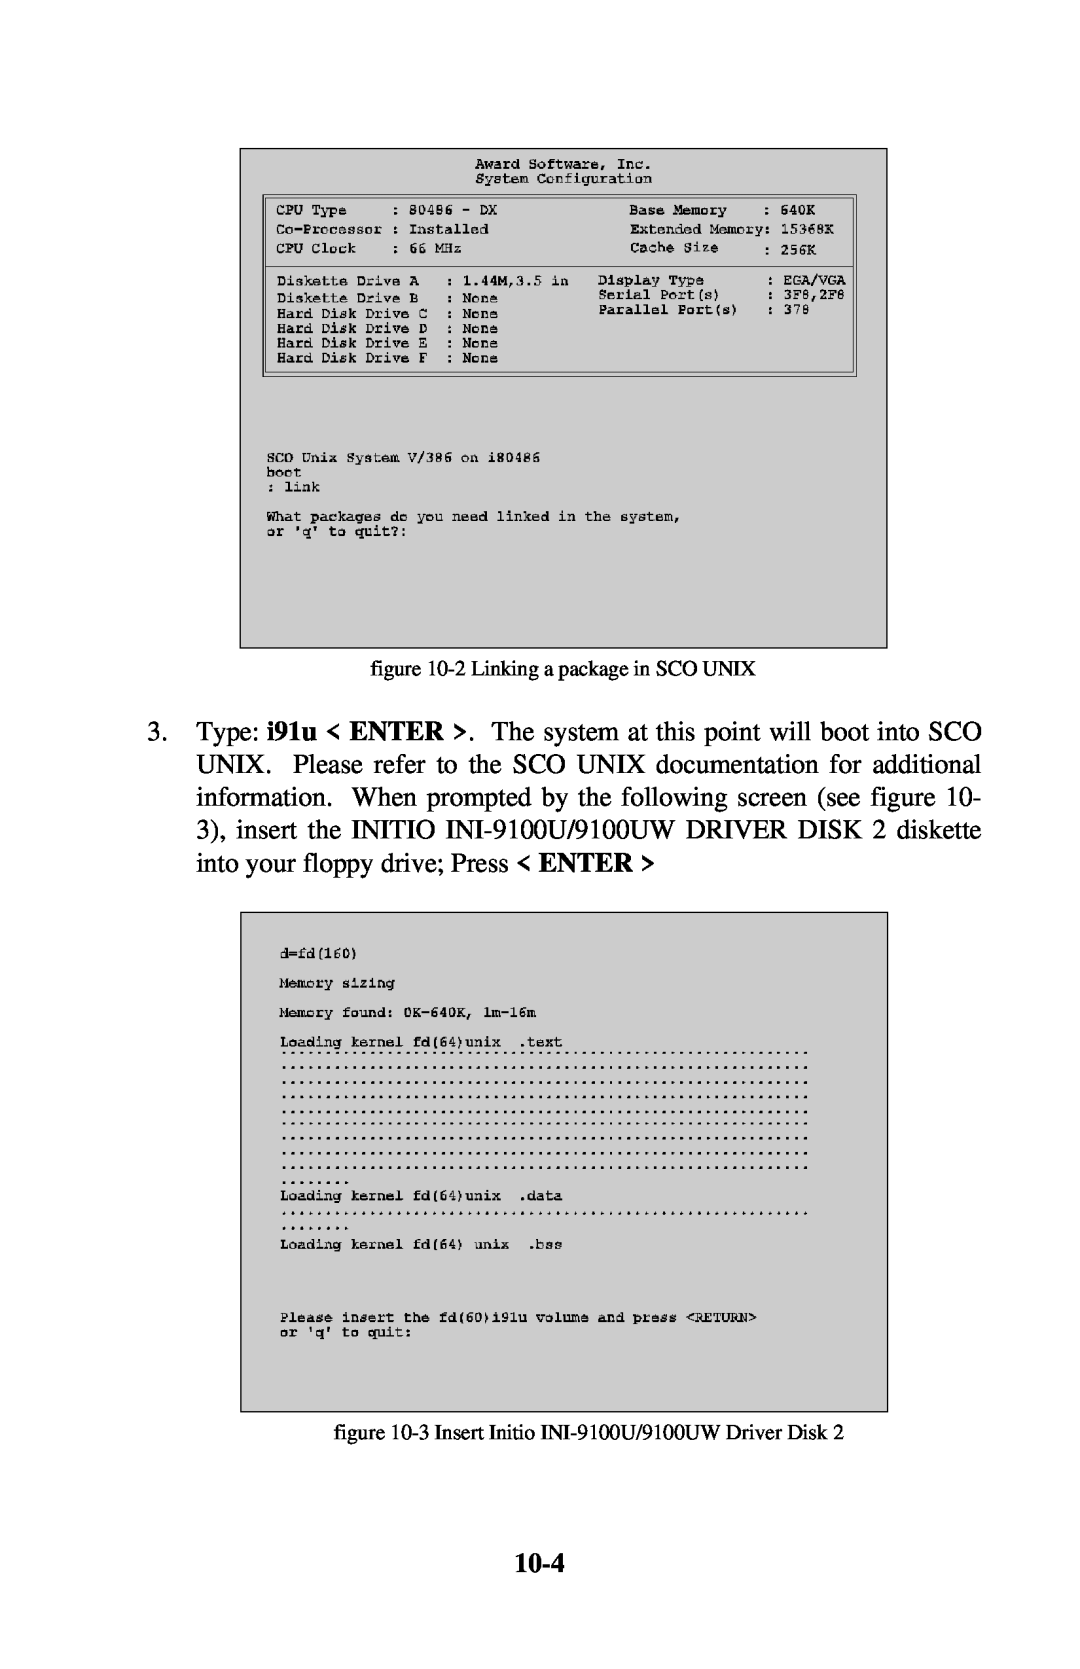 Initio INI-9100UW user manual 10-4, 2 Linking a package in SCO UNIX, 3 Insert Initio INI-9100U/9100UW Driver Disk 